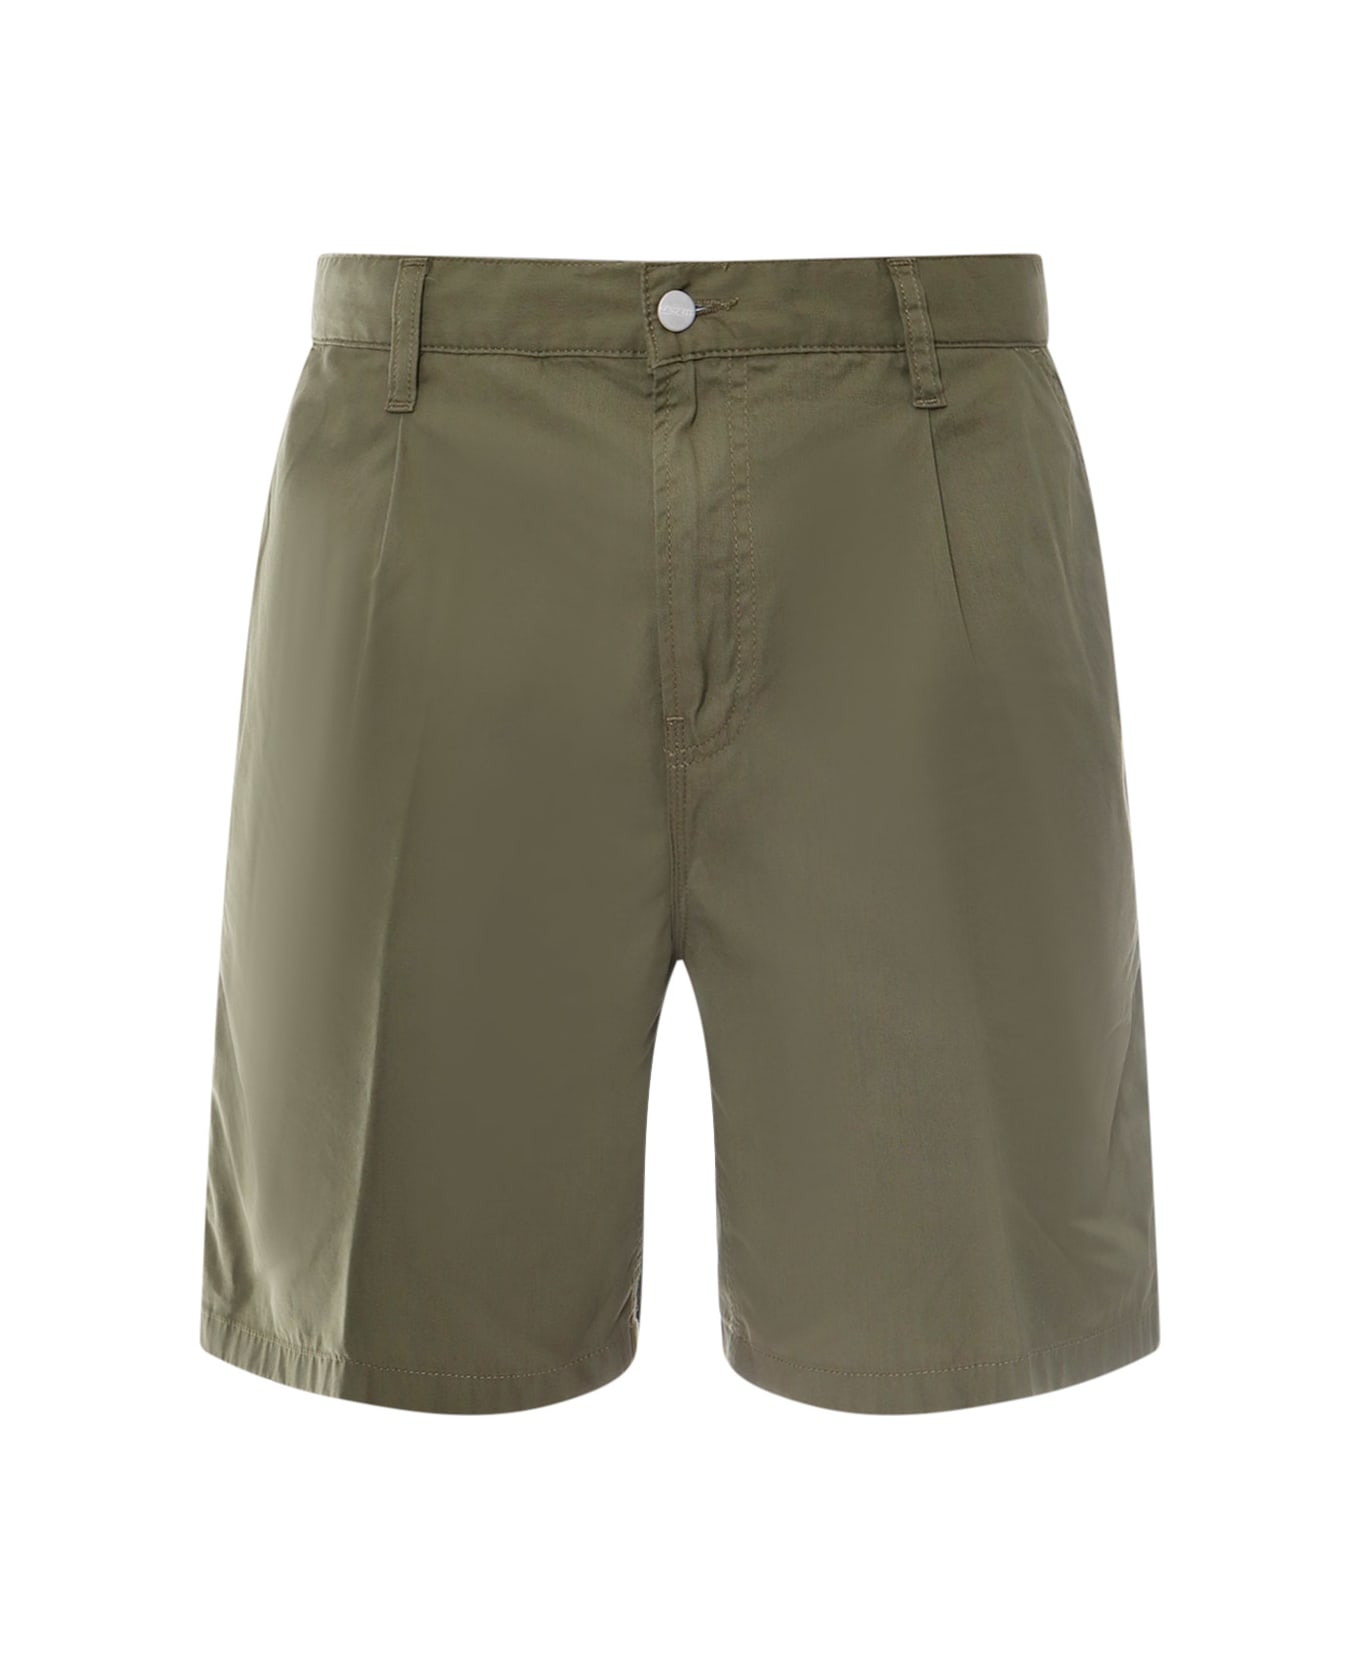 Carhartt Bermuda Shorts - Green